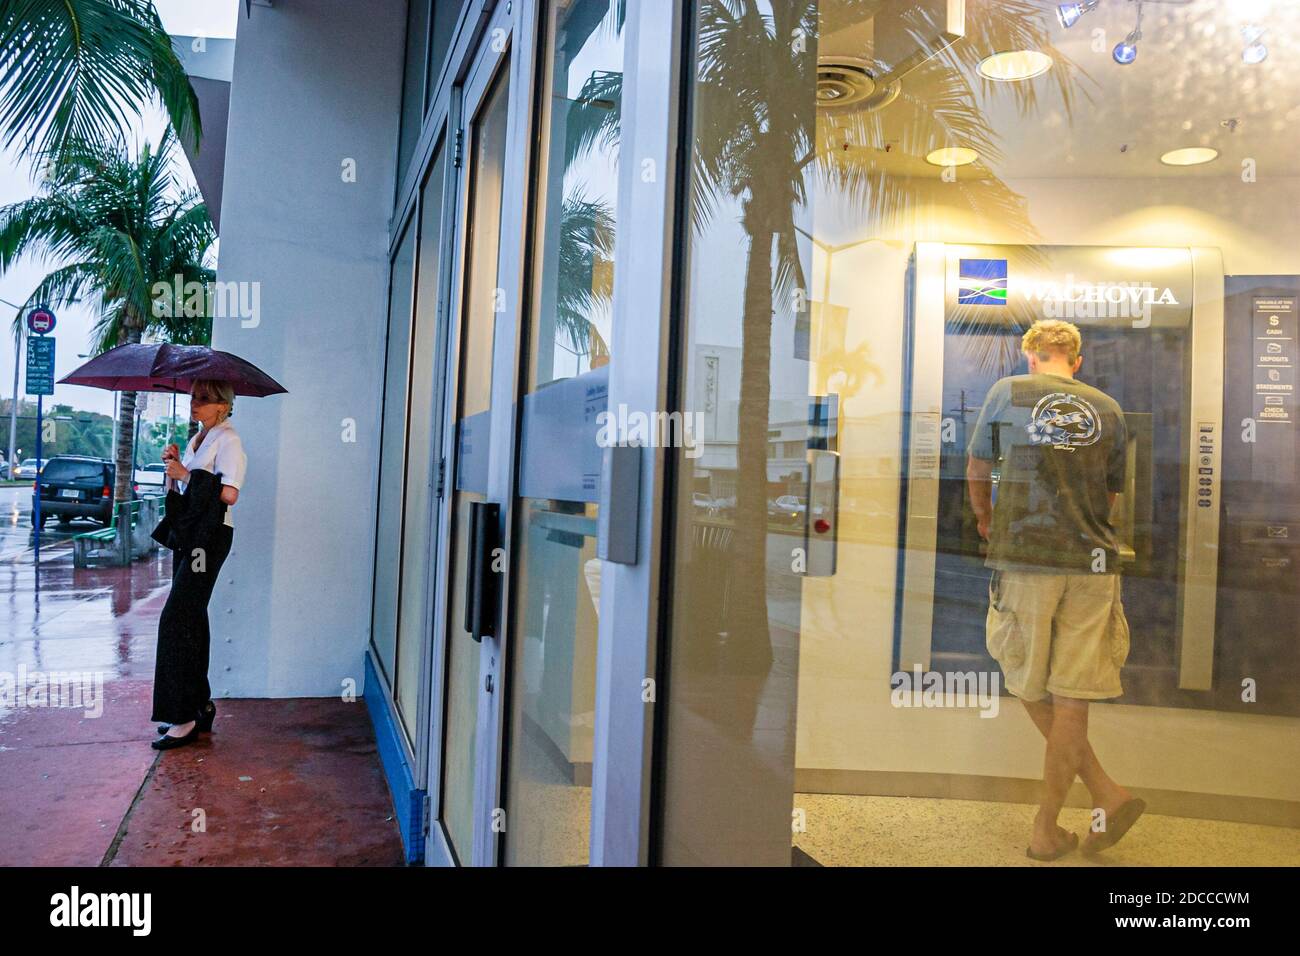 Miami Beach Florida,Wachovia Bank entrance,ATM A.T.M. automatic,automated teller machine,man using woman female waiting, Stock Photo